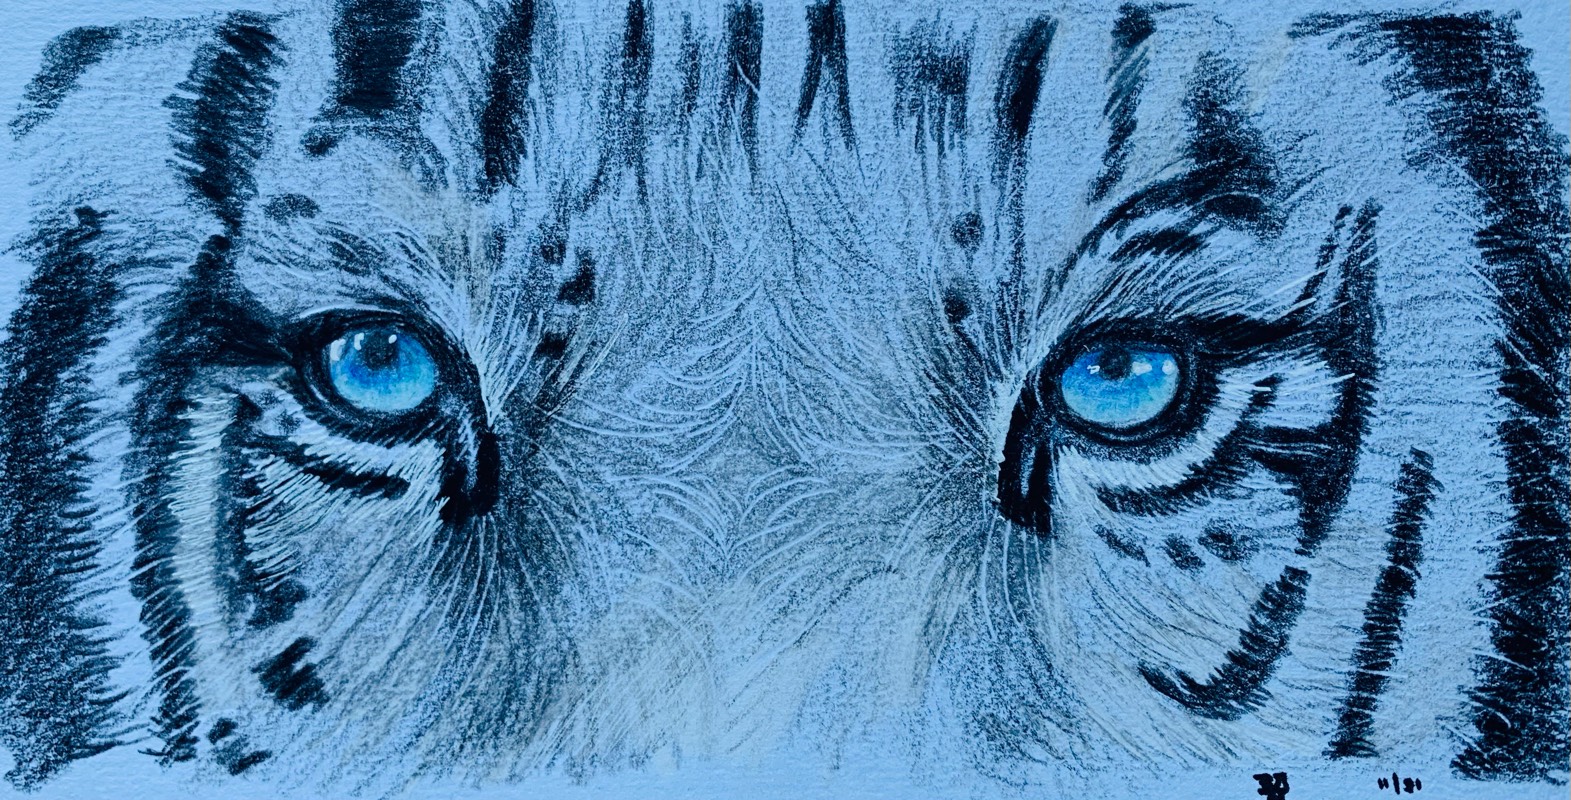 tiger by fairlawnbj (Colored pencil)